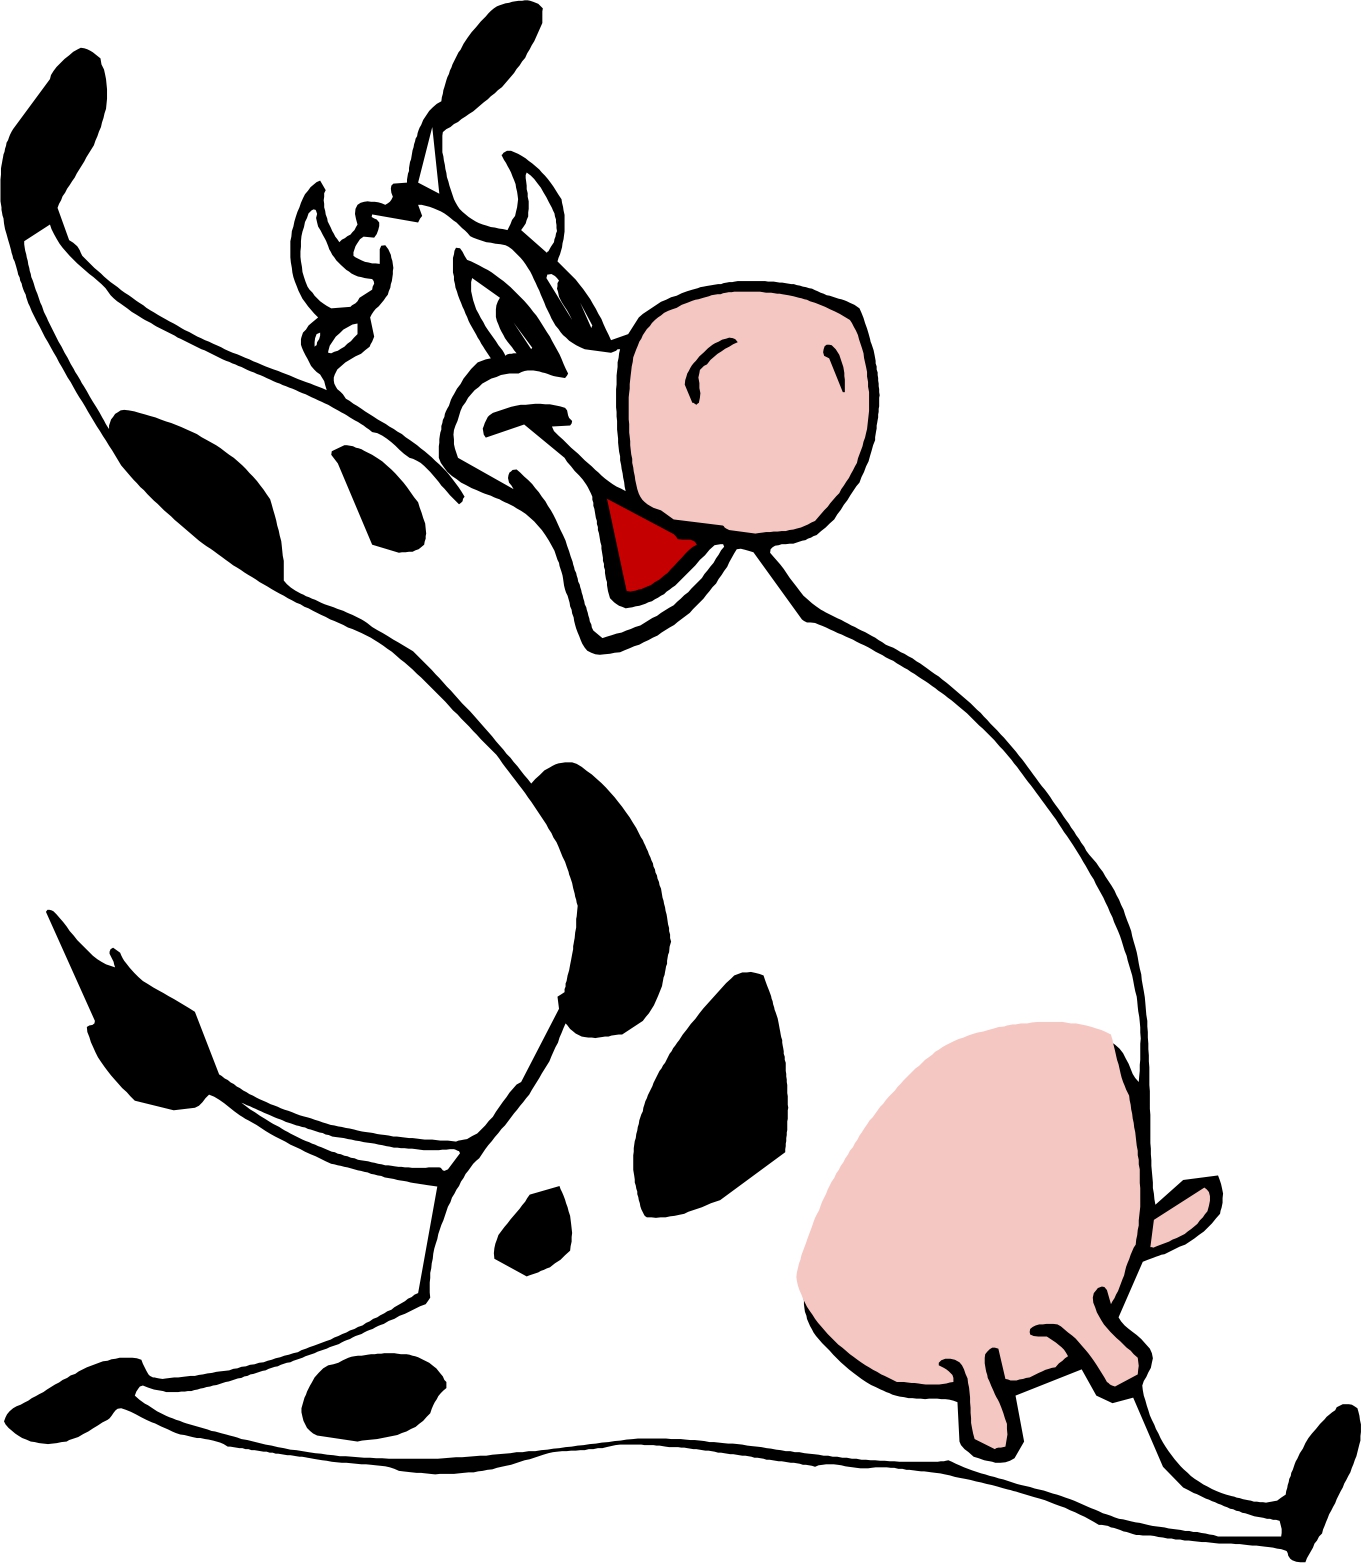 cow udder clipart - photo #27